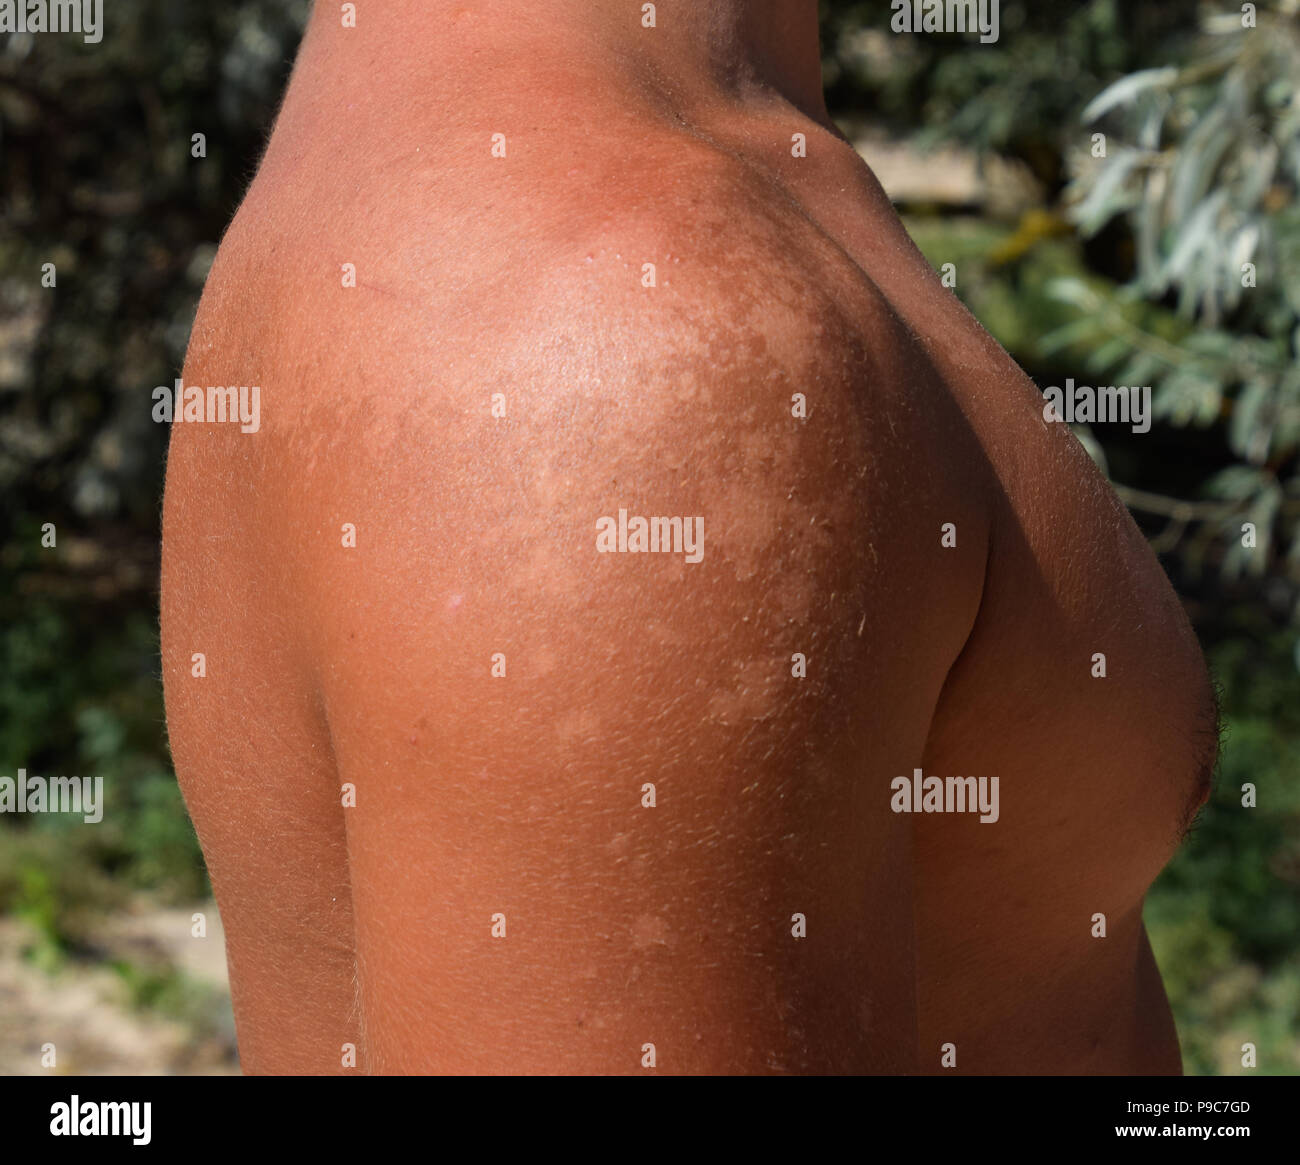 Sunburn on the skin of the shoulders. Exfoliation, skin peels off. Dangerous sun tan. Stock Photo